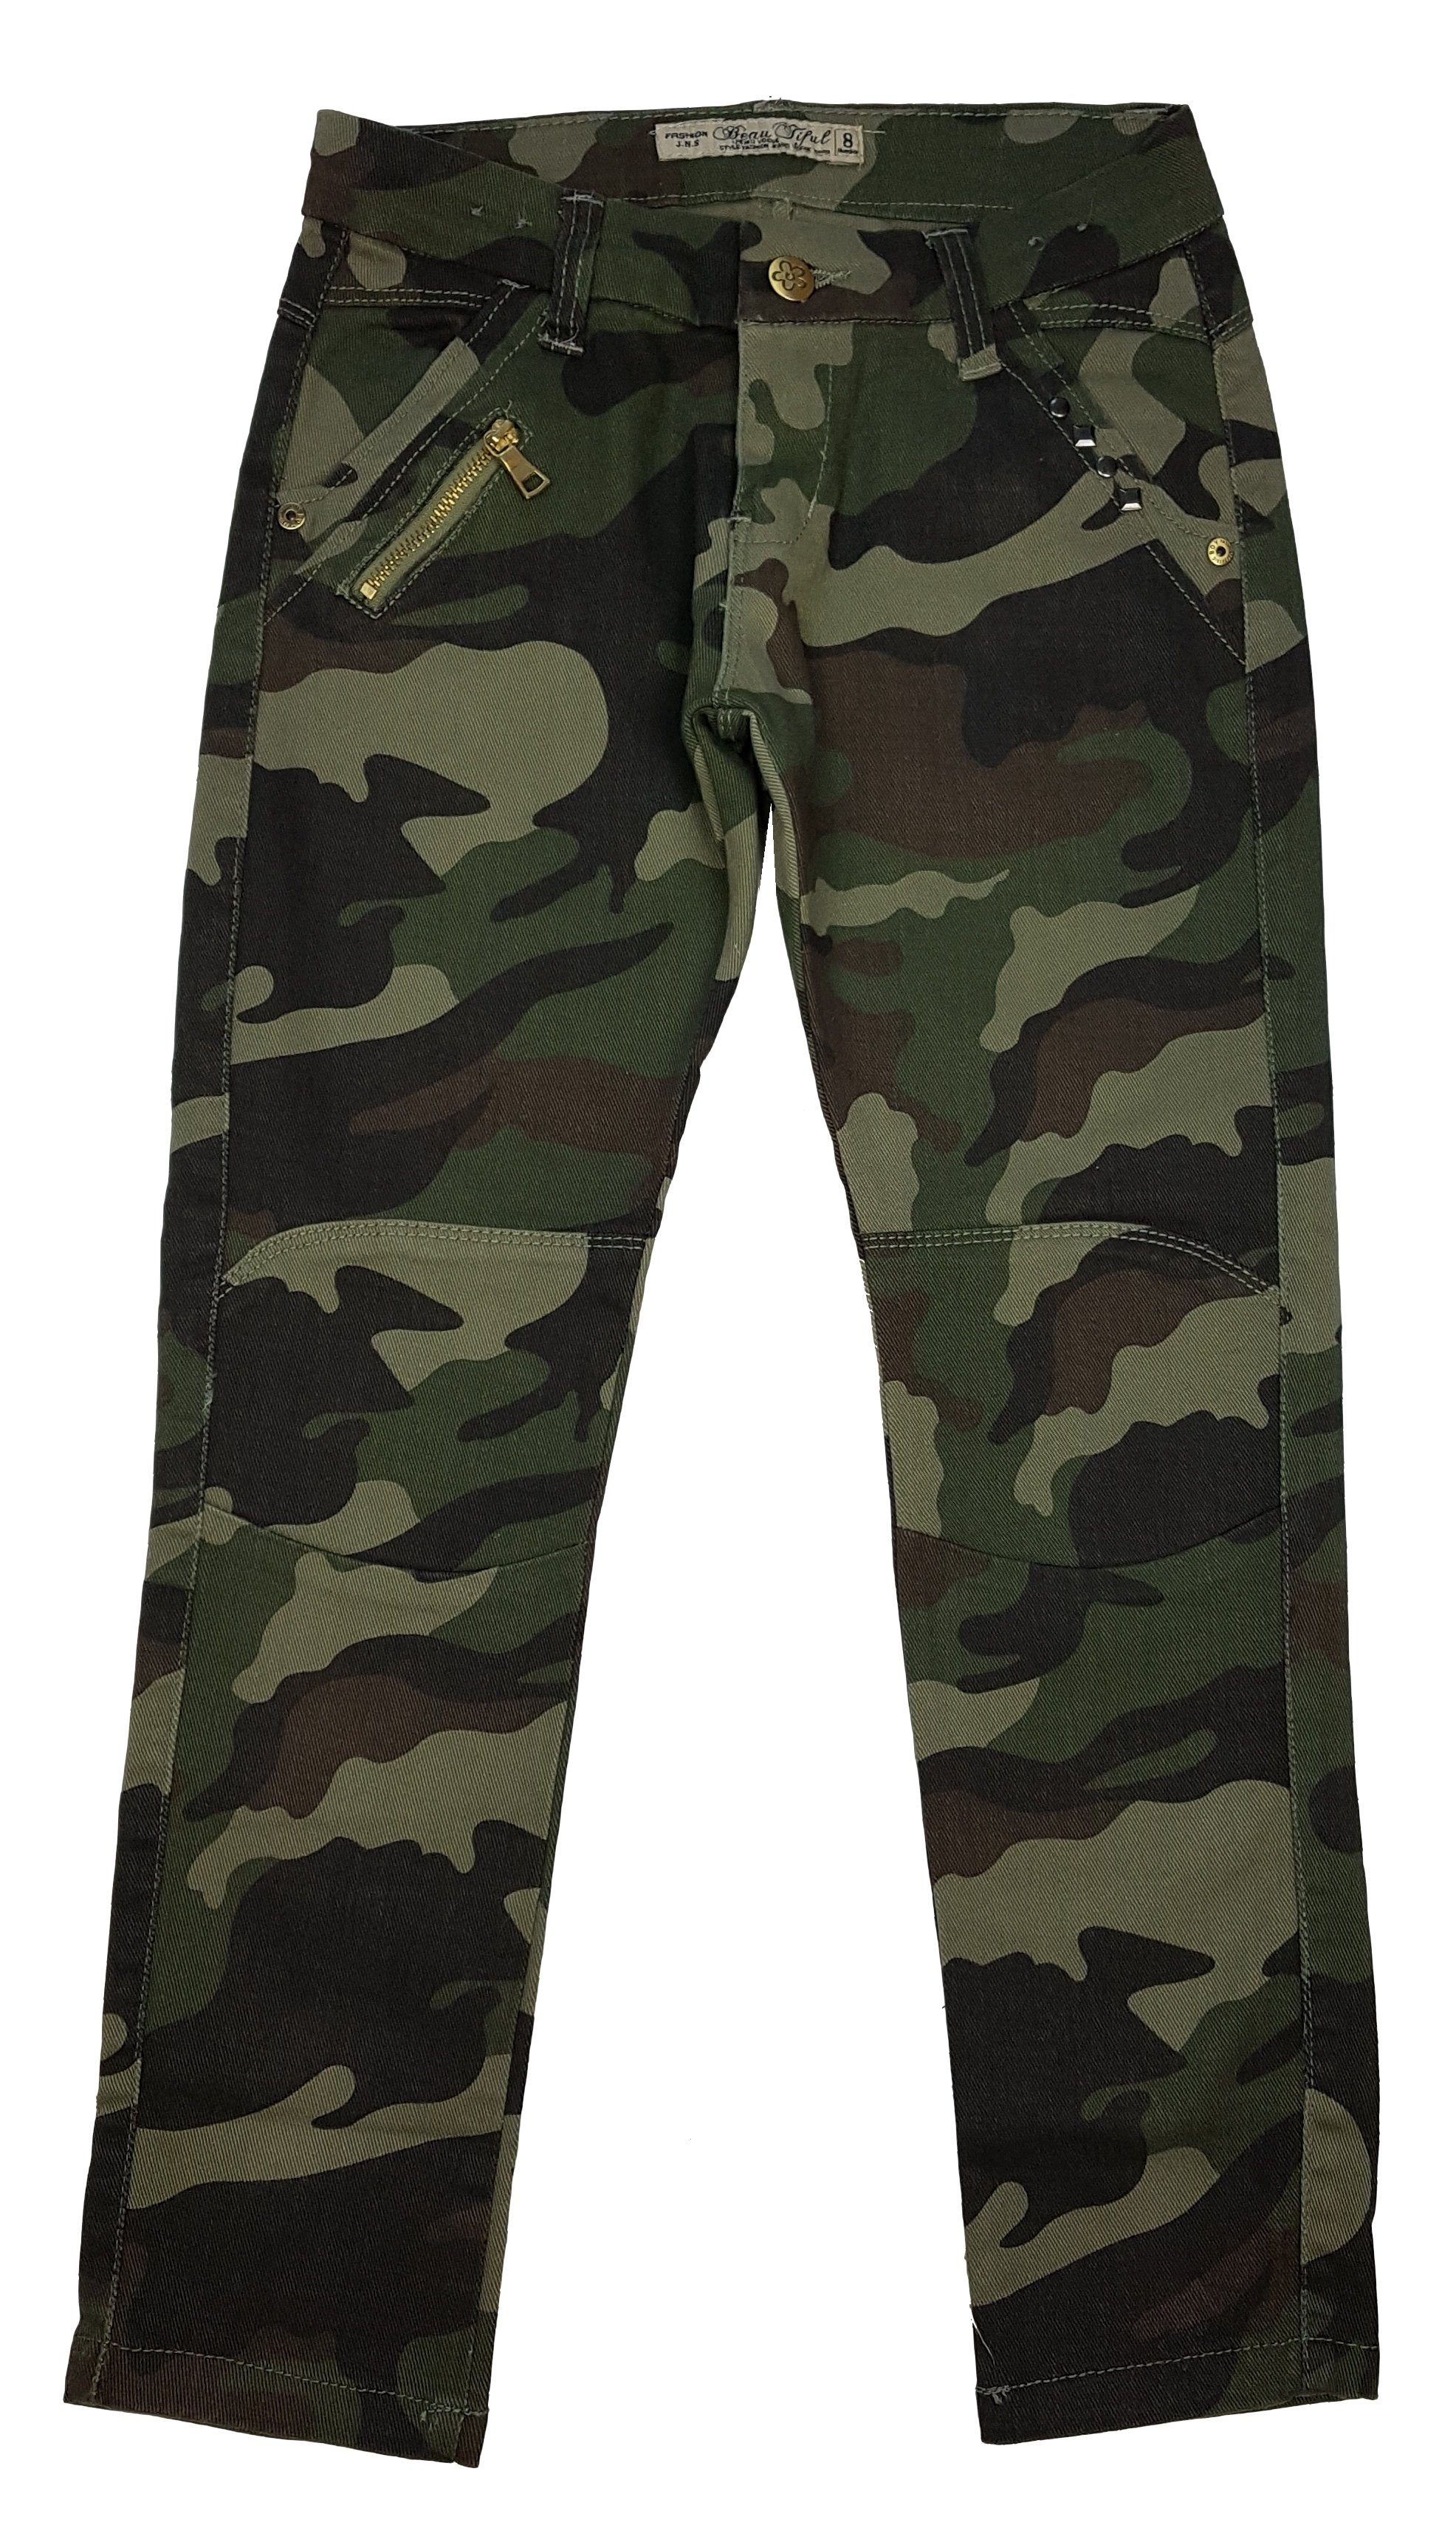 Mädchen Muster M8153 camouflage Girls grün Camouflage Fashion 5-Pocket-Jeans Tarnhose, Army